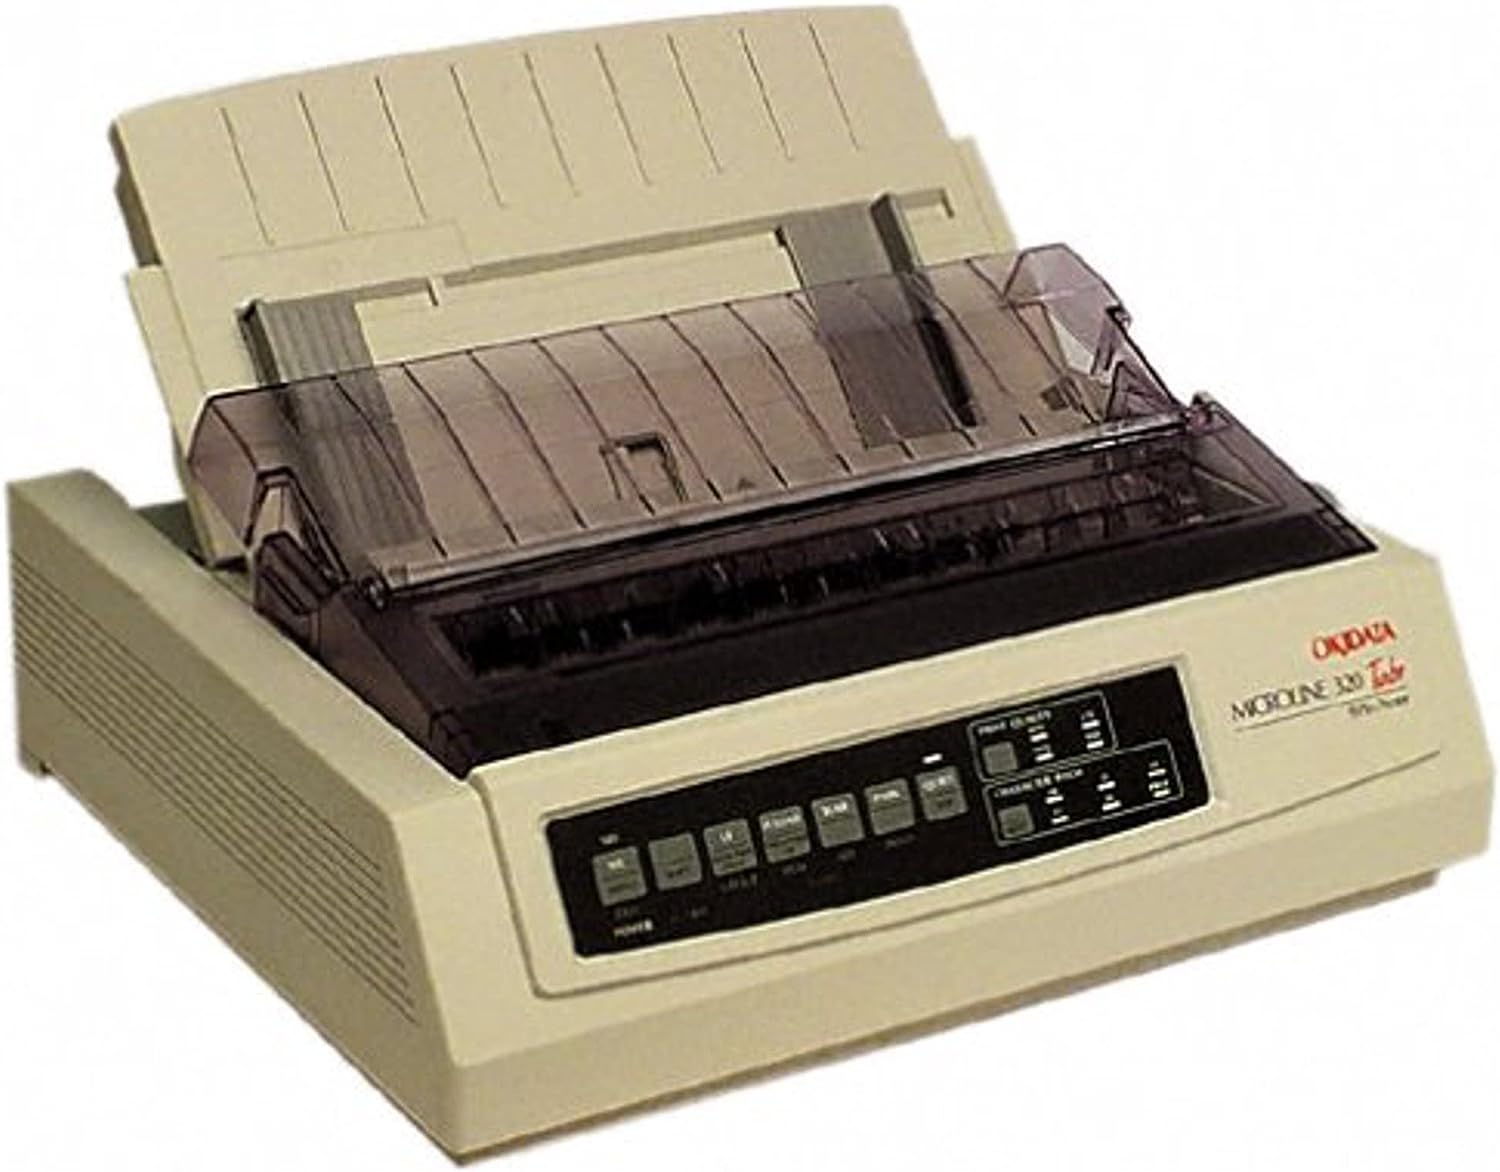 OKI Microline 320 Turbo Printer - OKI Data 320 Turbo [...]